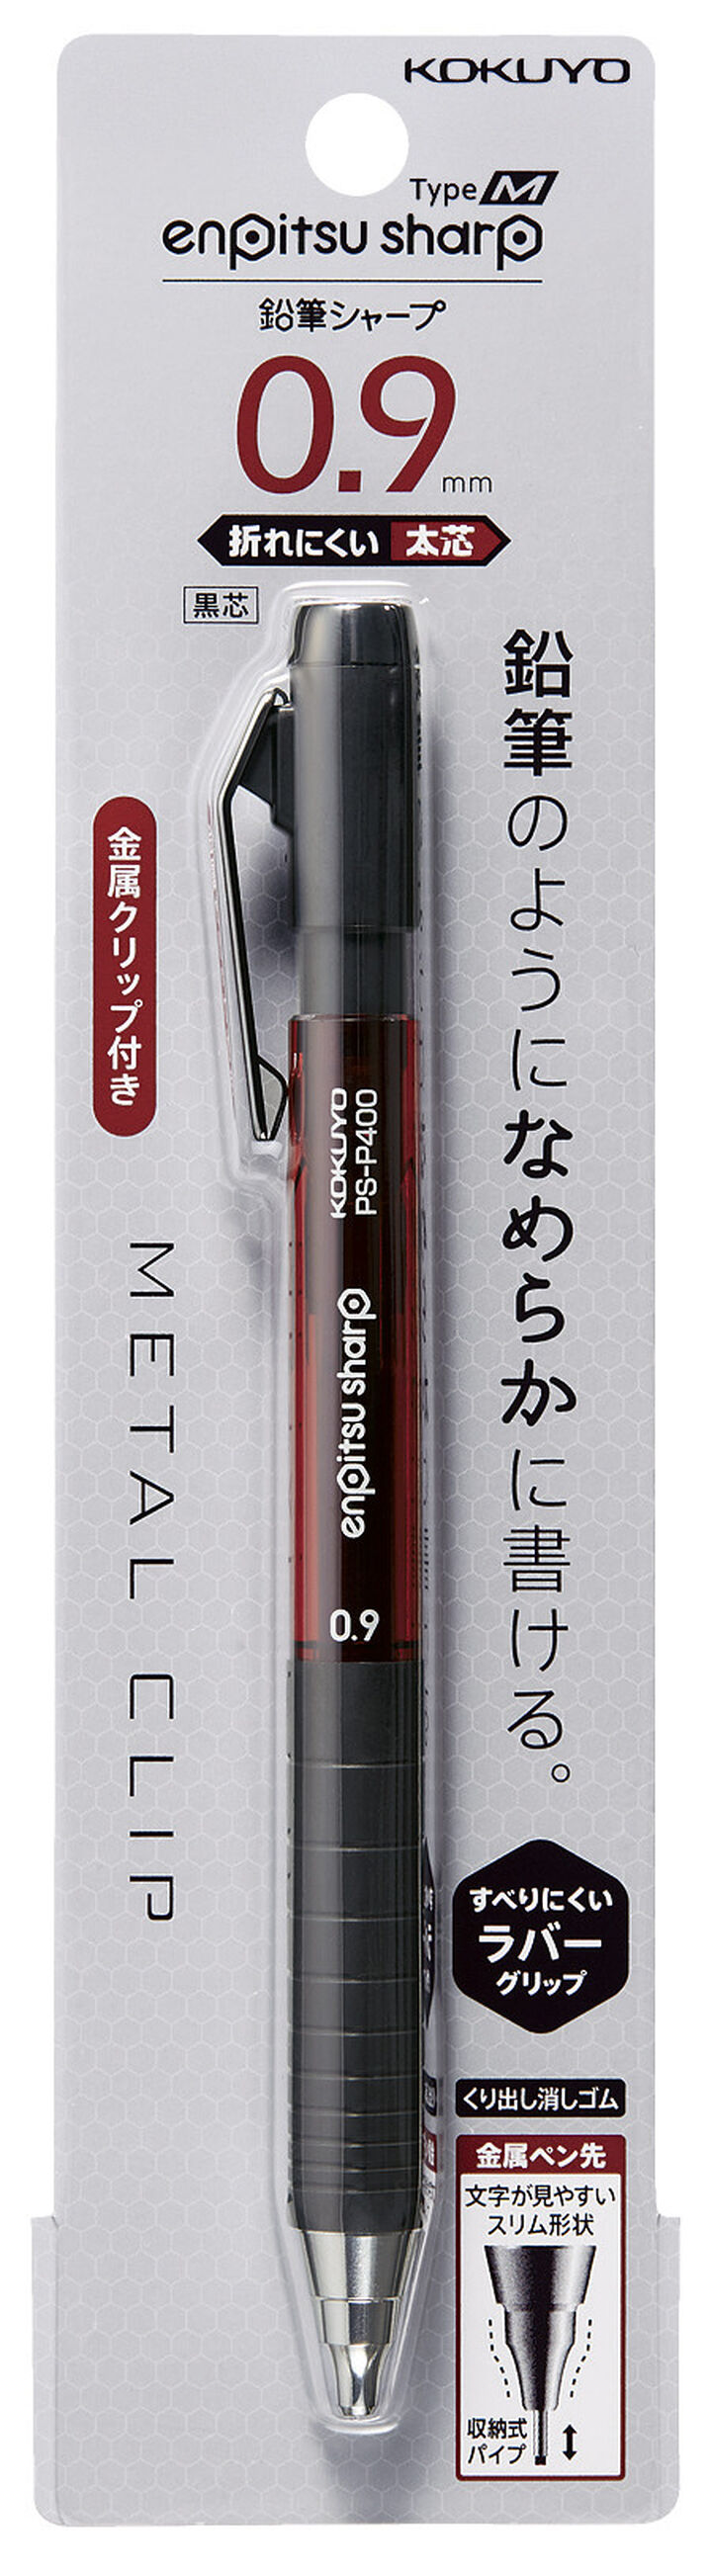 Enpitsu sharp mechanical pencil TypeM 0.9mm Rubber Grip,Red, medium